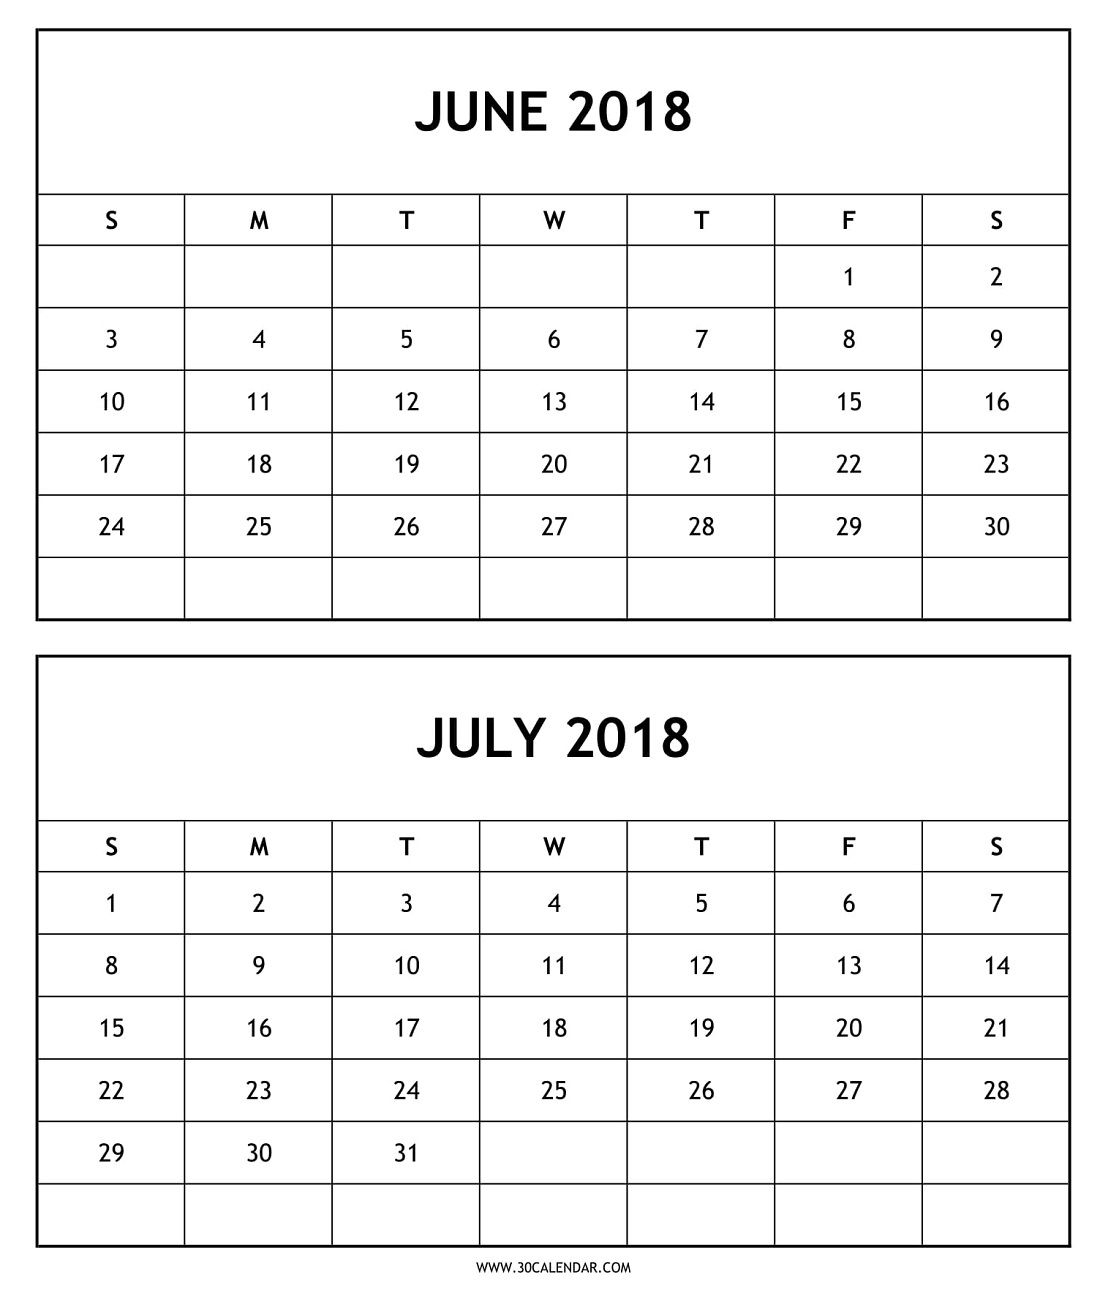 Download And Edit Calendar June July 2018 | 2018 Calendar | Calendar throughout Calendar For June July